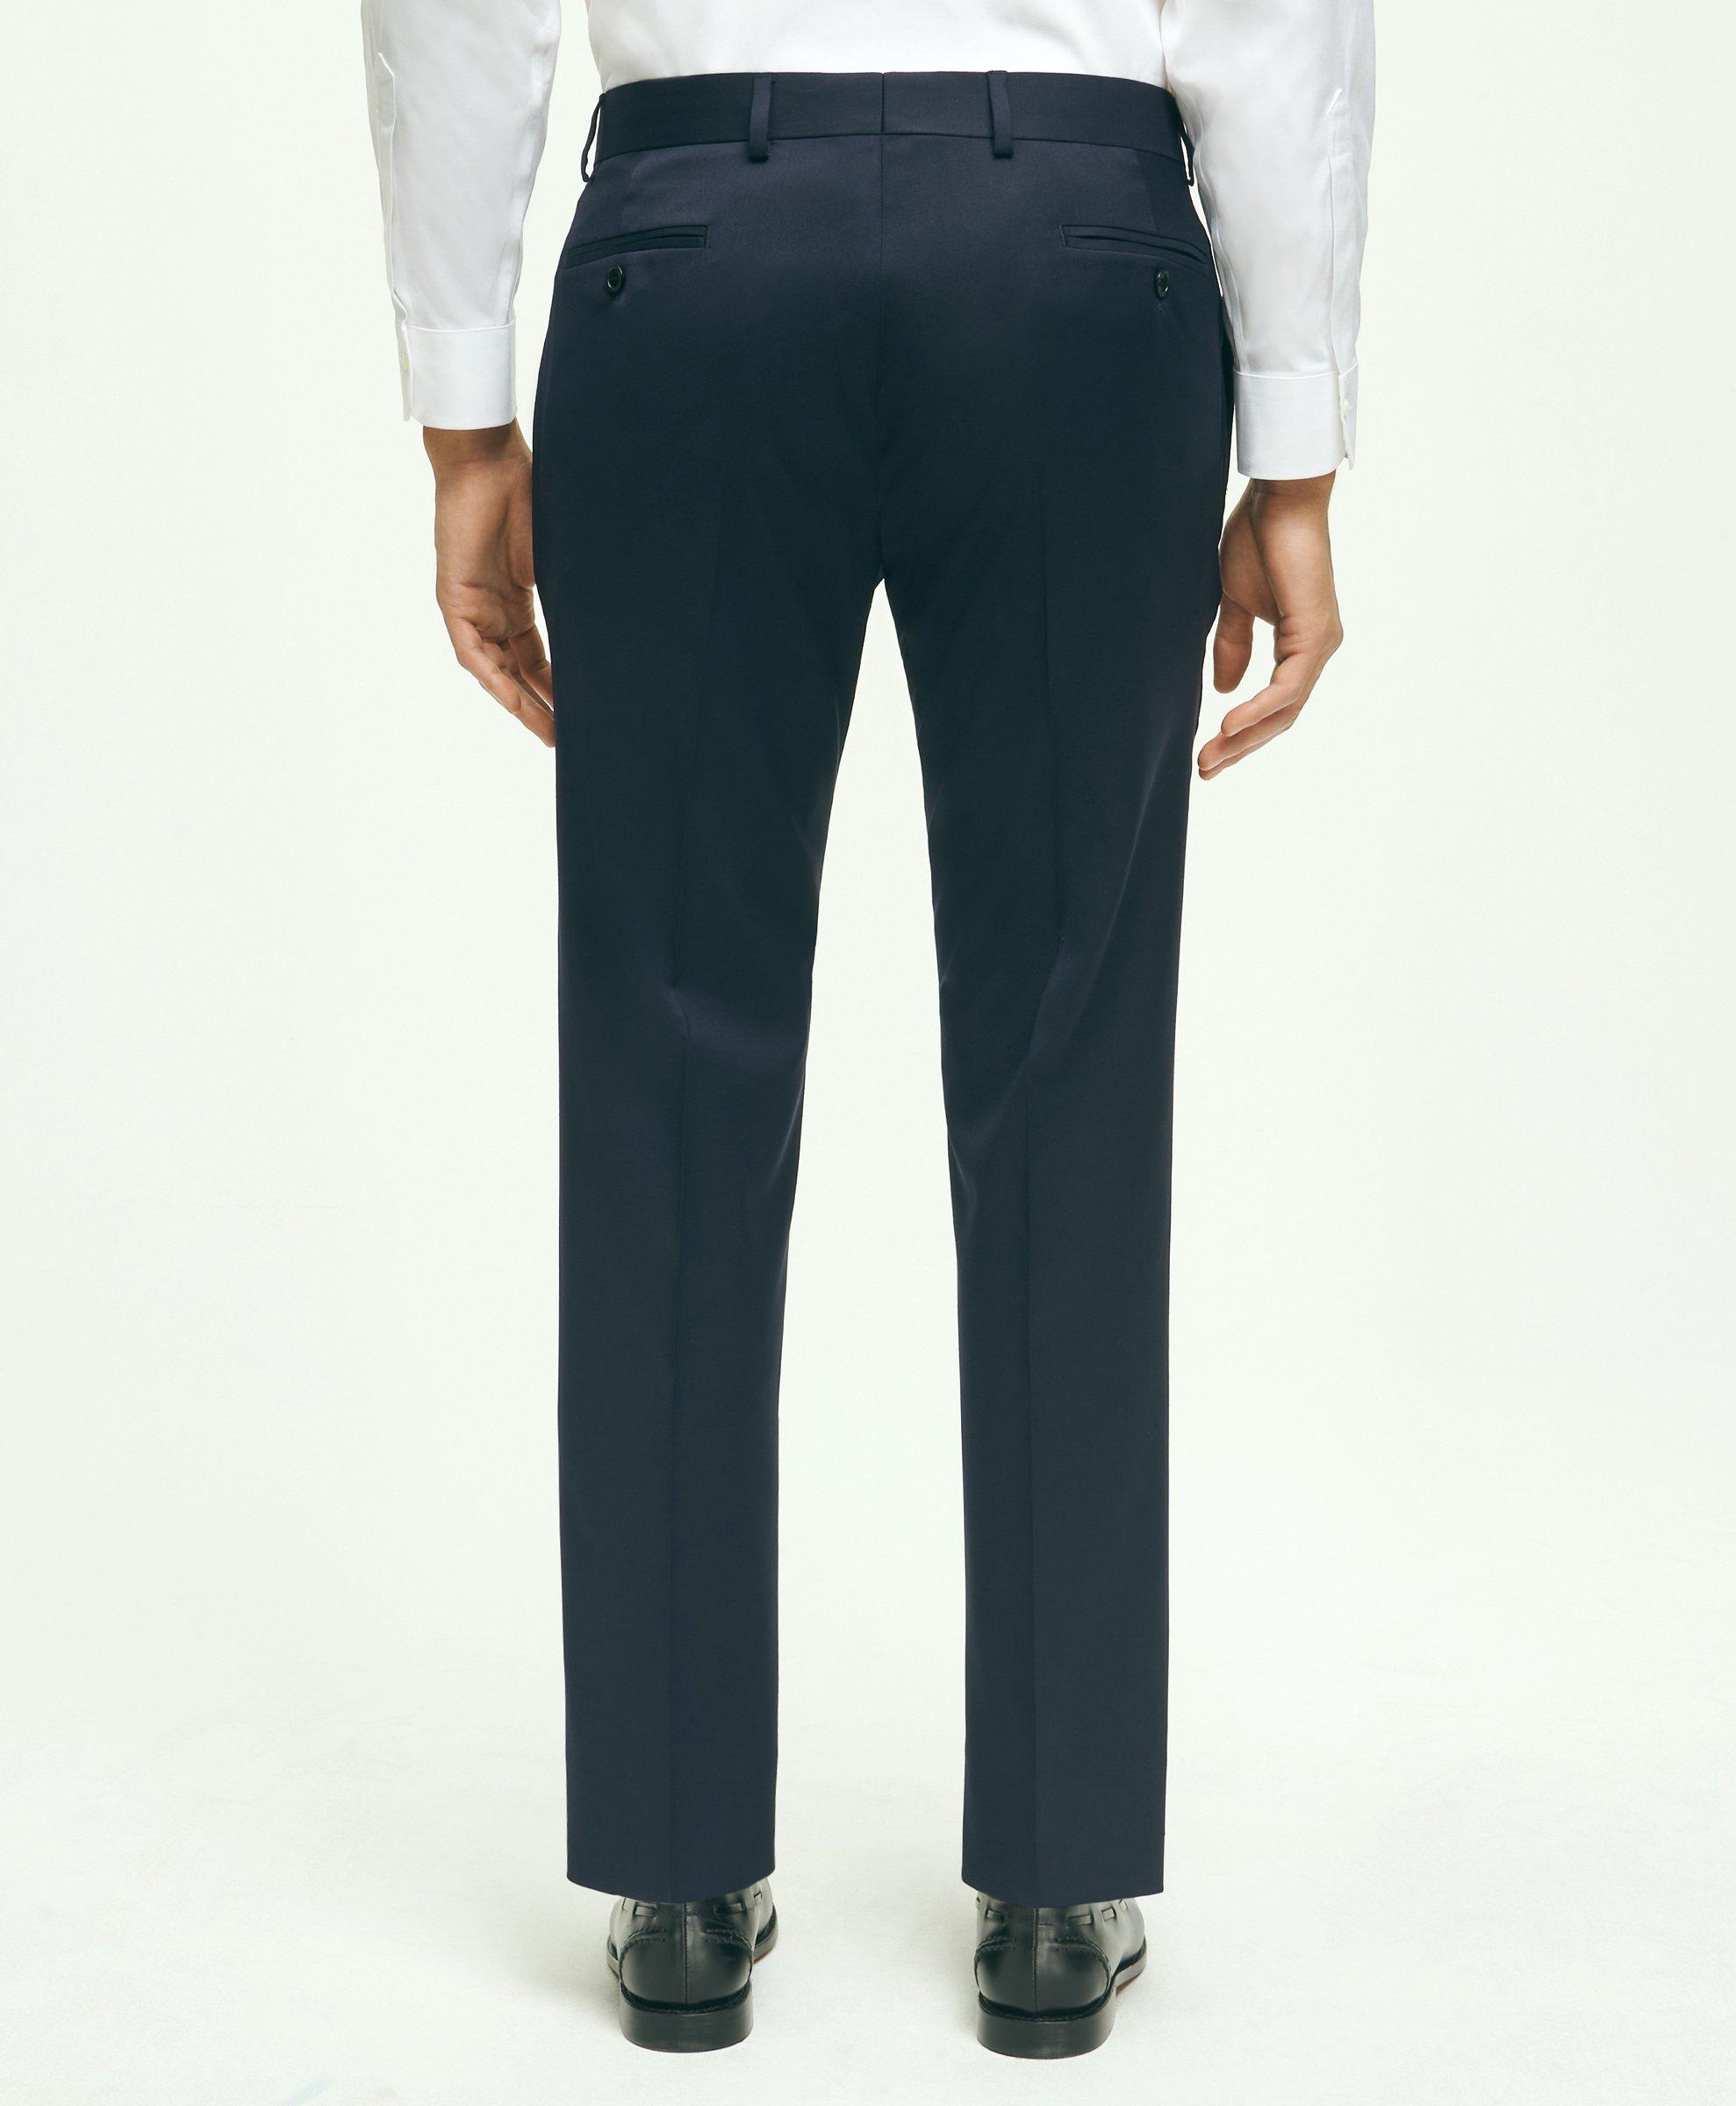 Buy Merino Wool Pants Men Online In India -  India